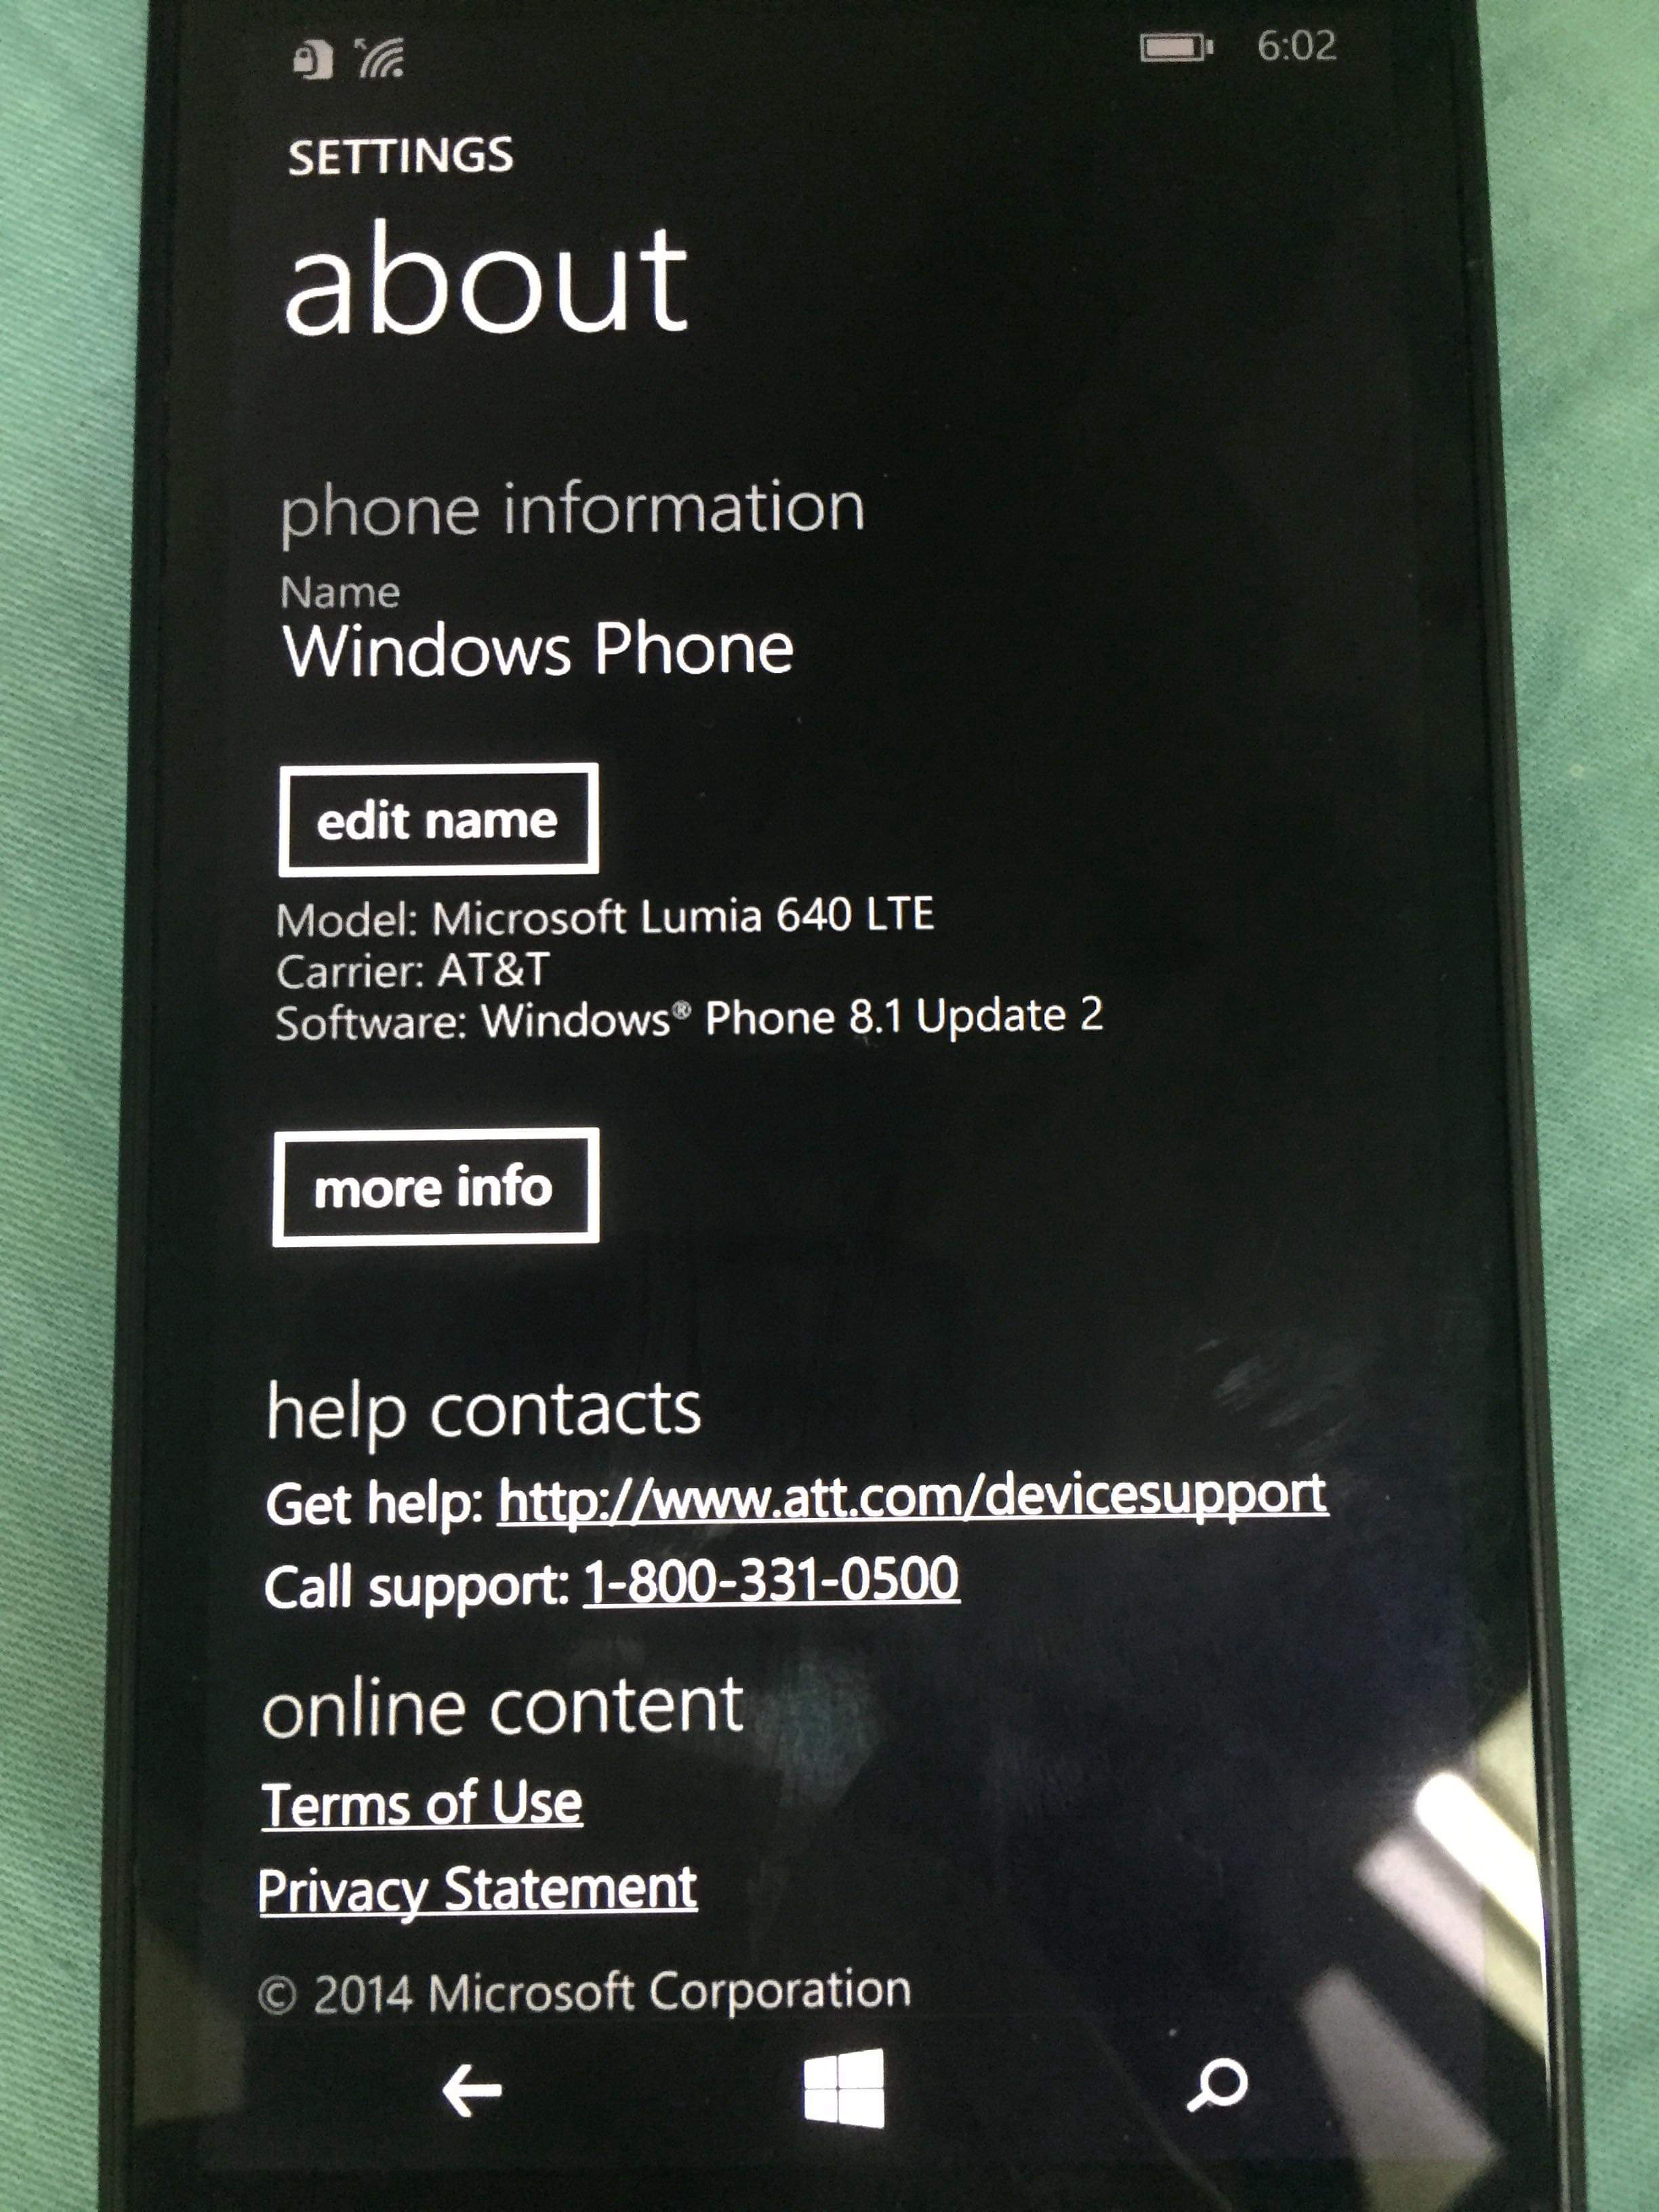 Spotify apk for windows phone 8.1 windows 10